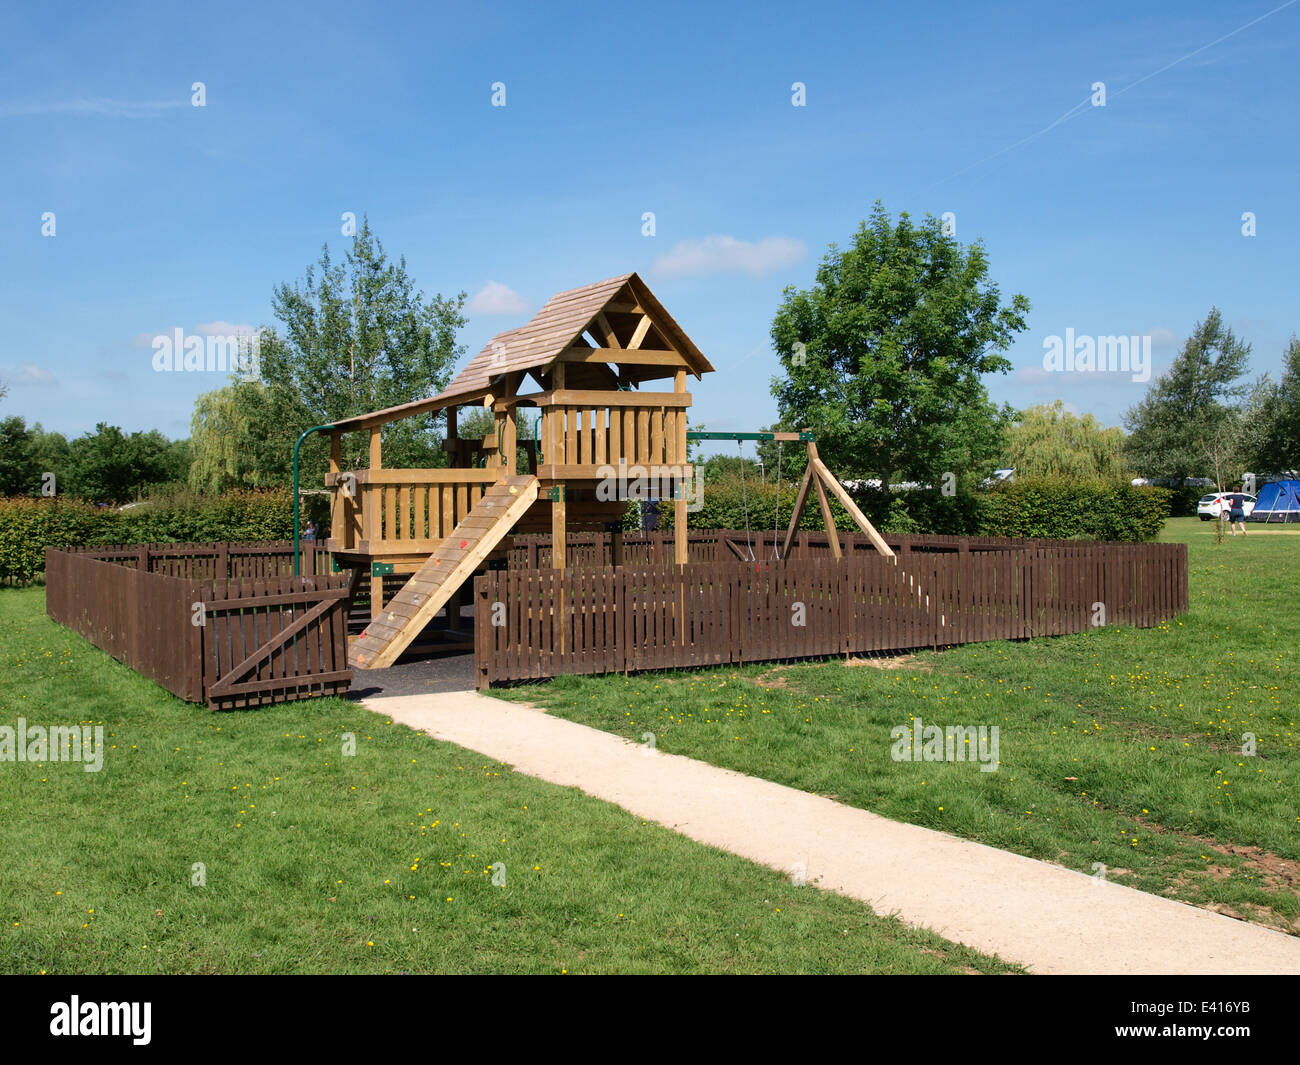 Children's wooden play park, UK Stock Photo